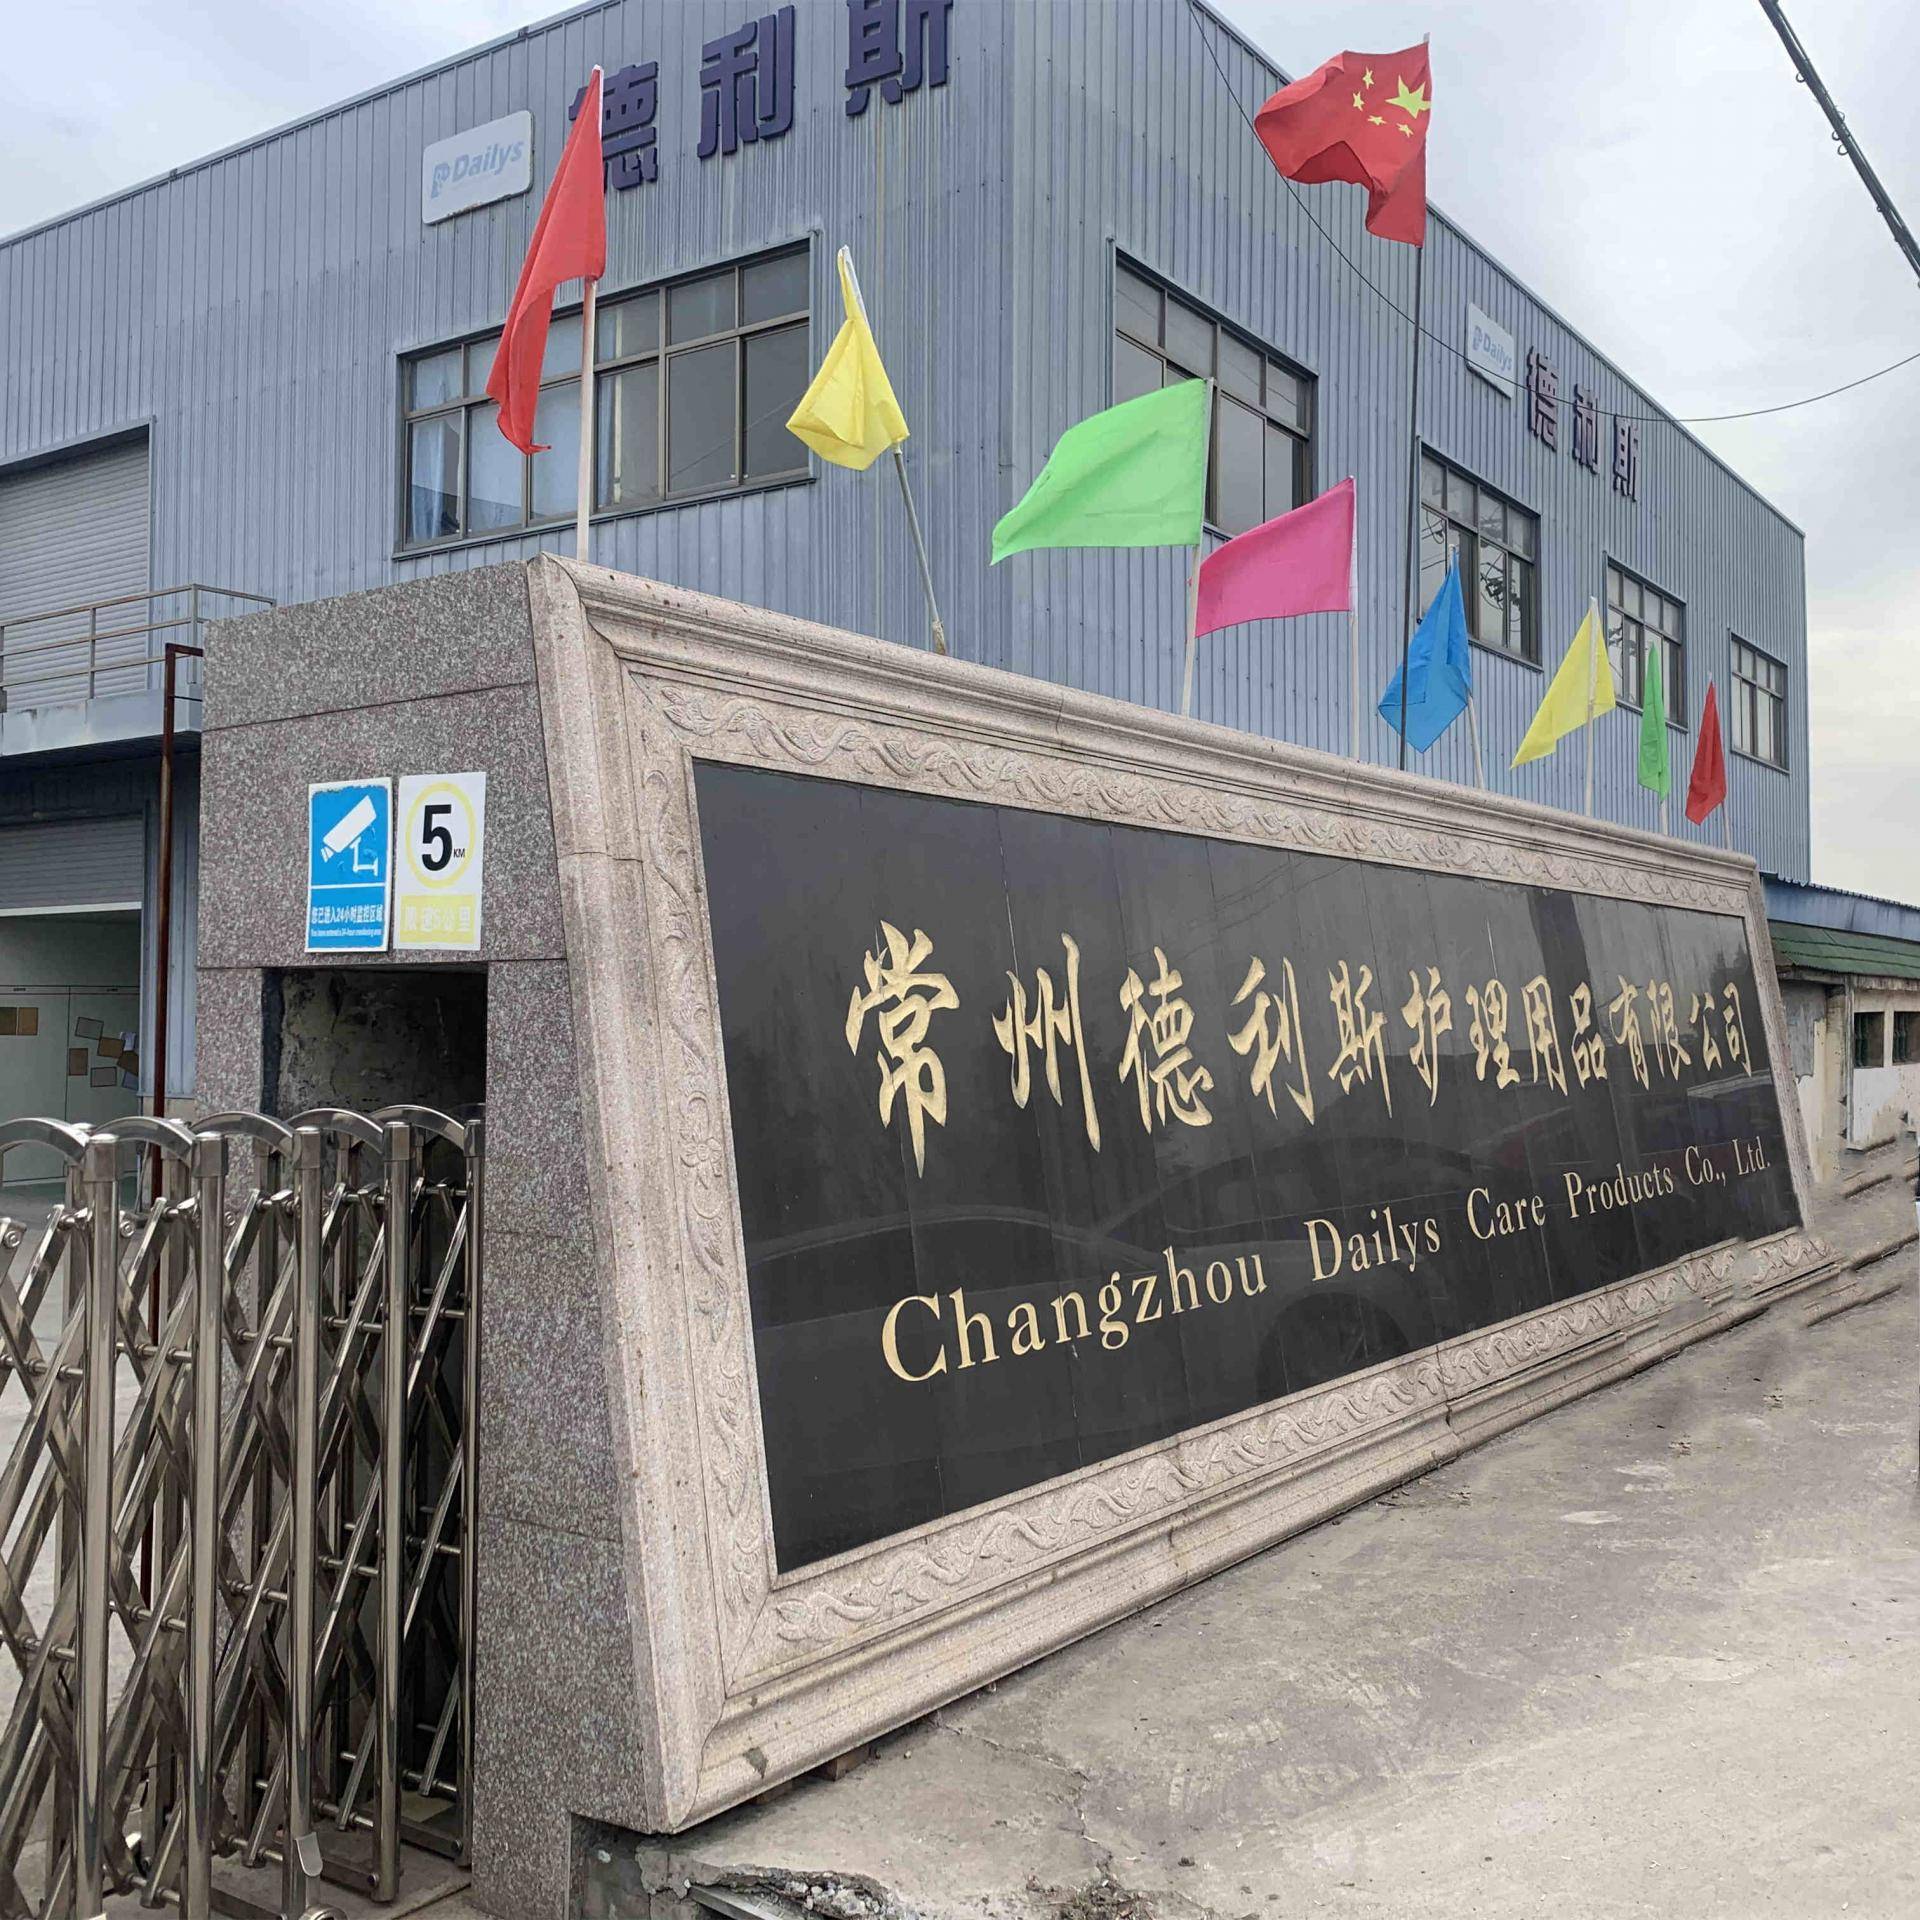 Why choose Changzhou Dailys ?